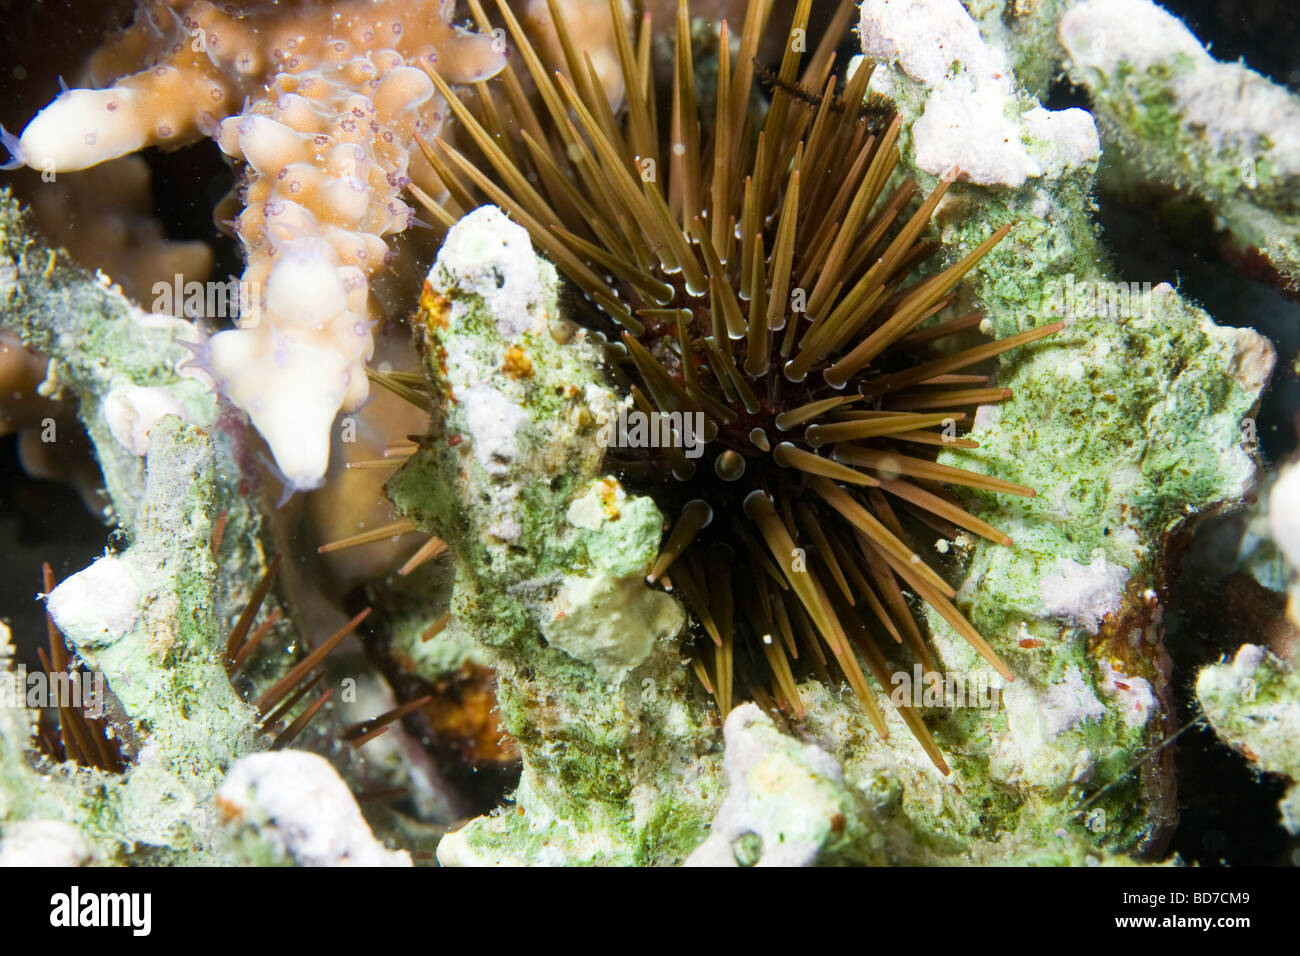 Sea urchin (Echinometra mathaei) Stock Photo